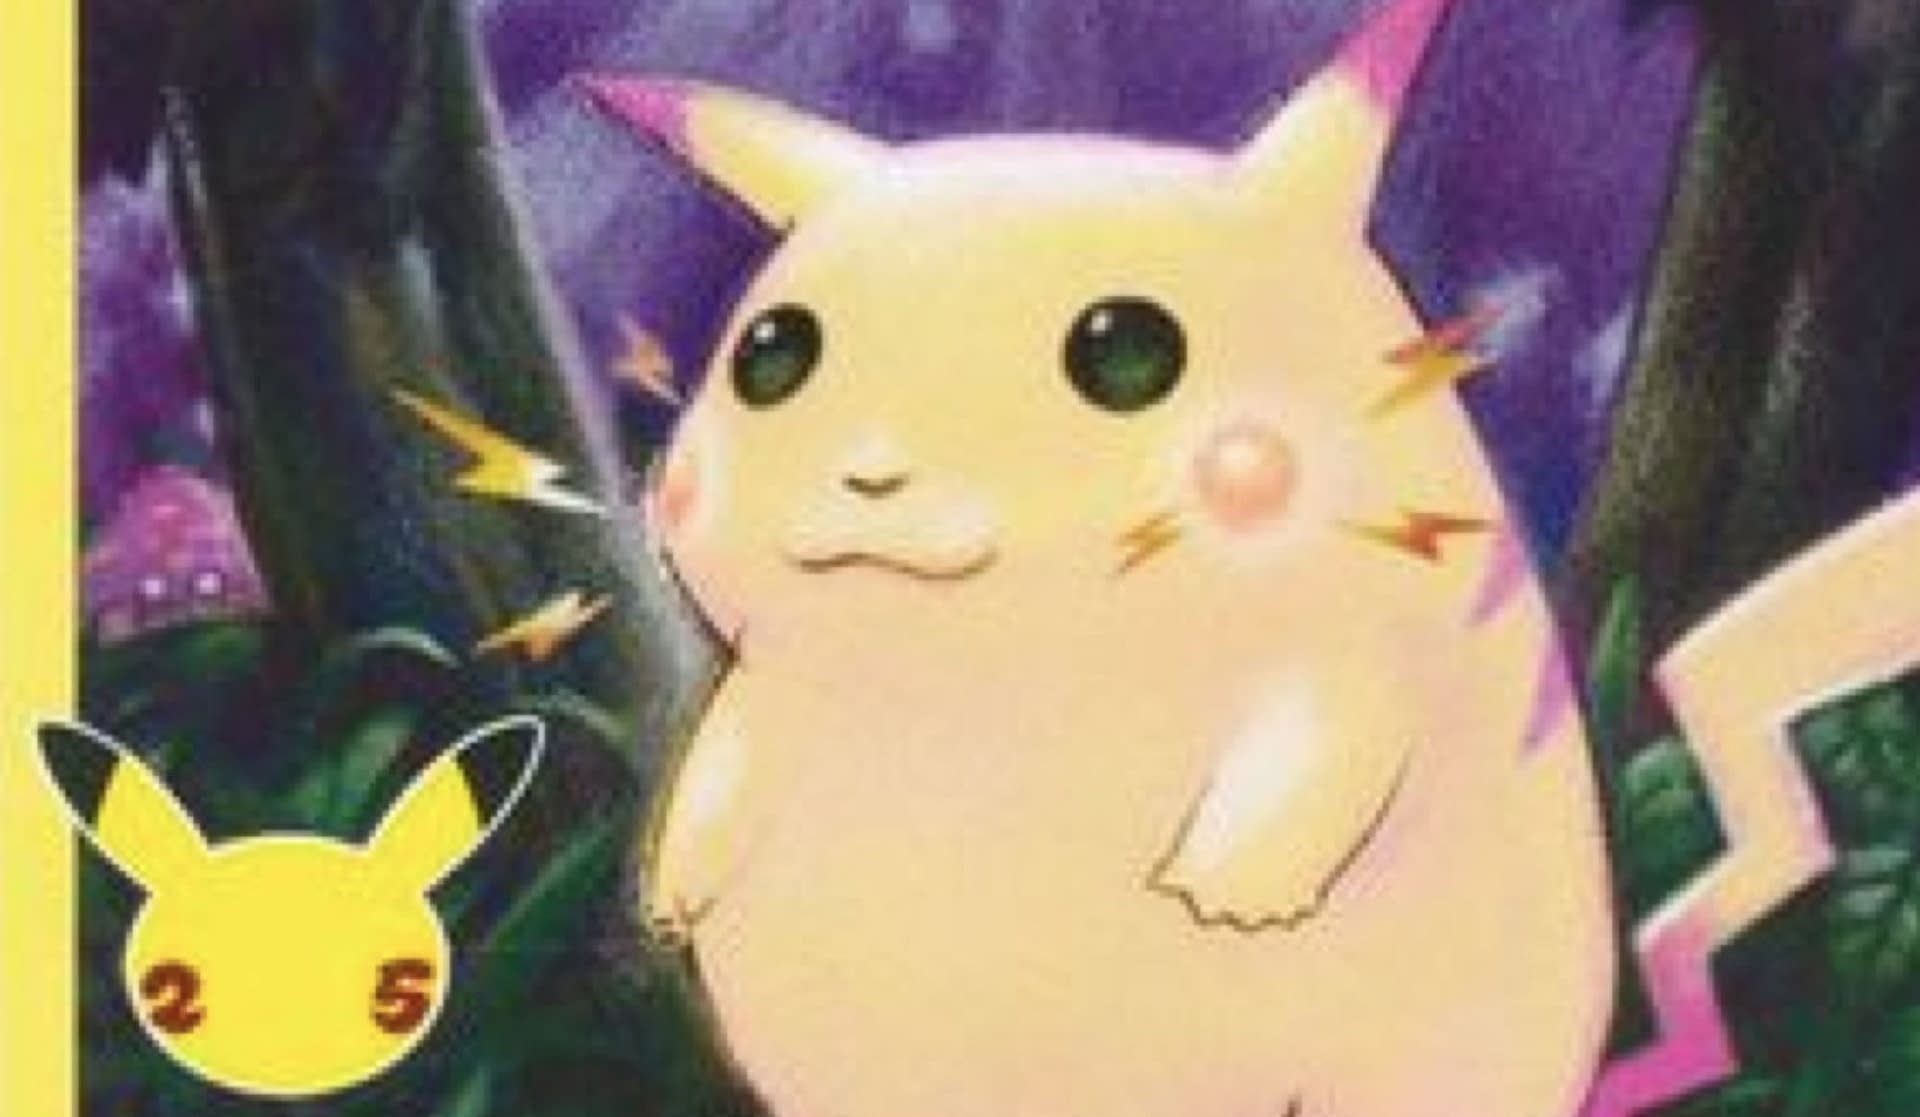 Pokemon Card Game "Promotion Card, Pikachu M LV.X"